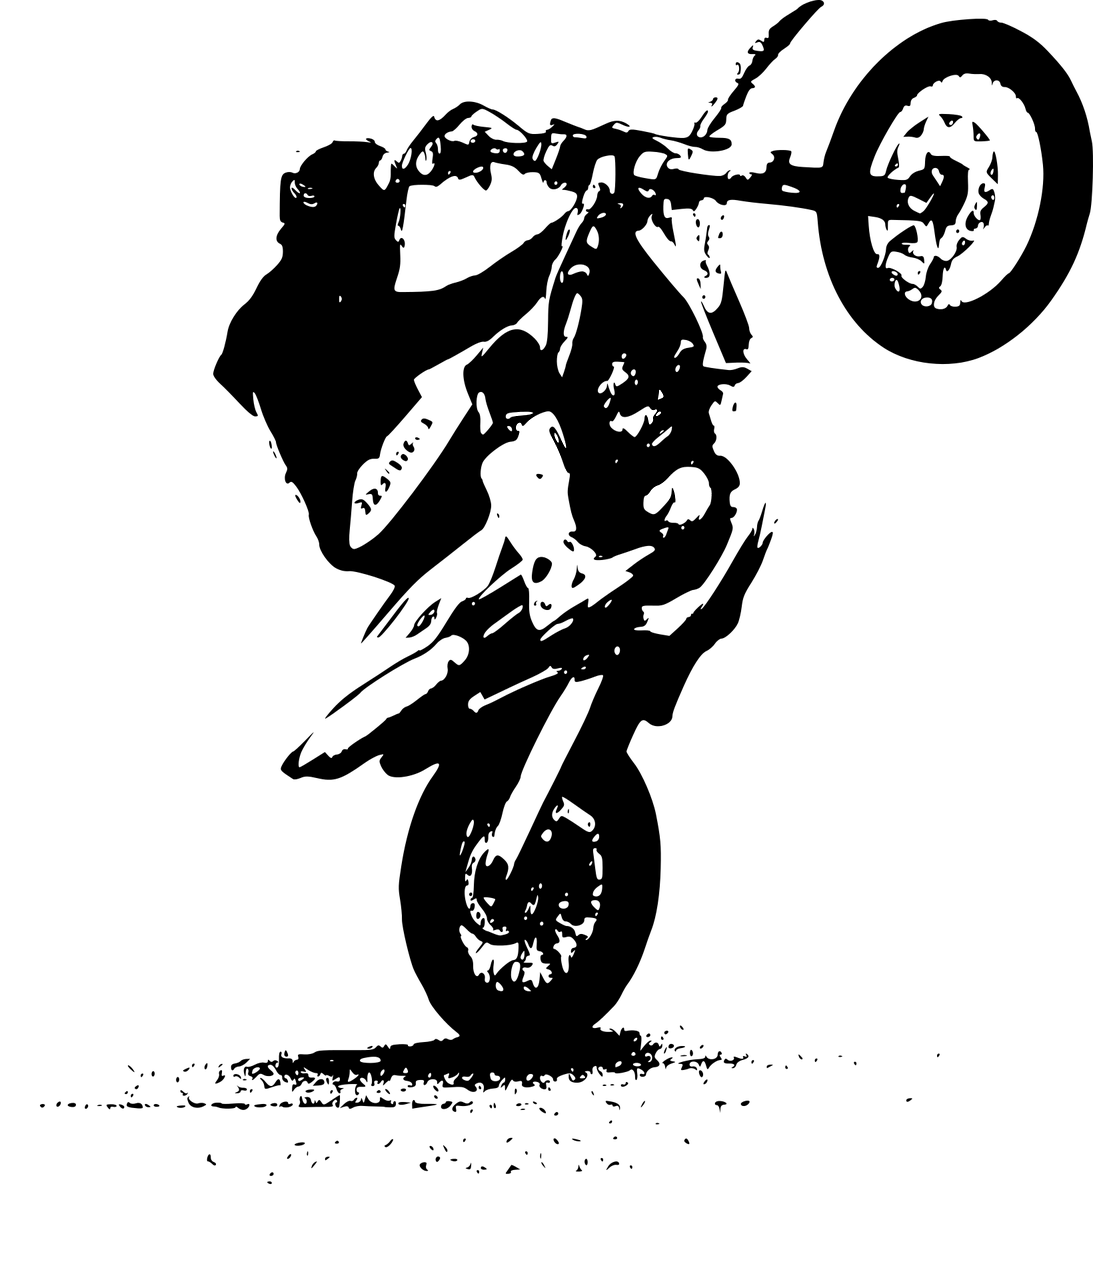 a close up of a cat's eyes in the dark, a black and white photo, inspired by Taro Yamamoto, reddit, hurufiyya, low quality video, black backround. inkscape, alien spaceship, miles morales!!!